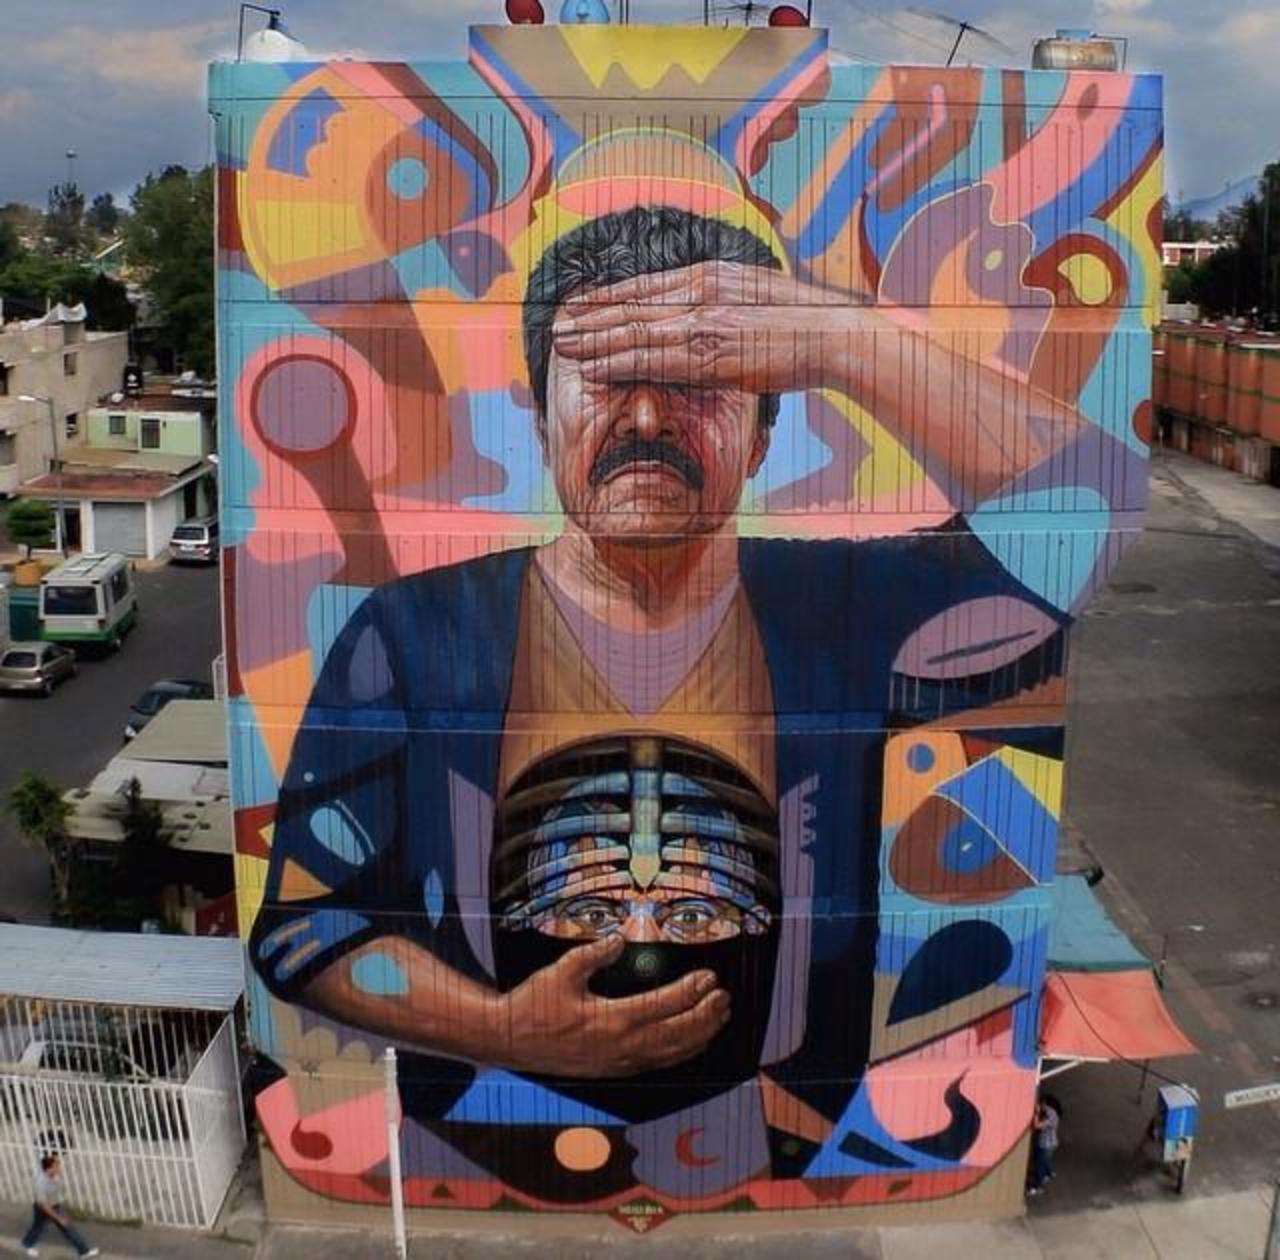 Large scale Street Art by the artist Daniel Cortez 

#art #mural #graffiti #streetart http://t.co/Zz8Exuch1O